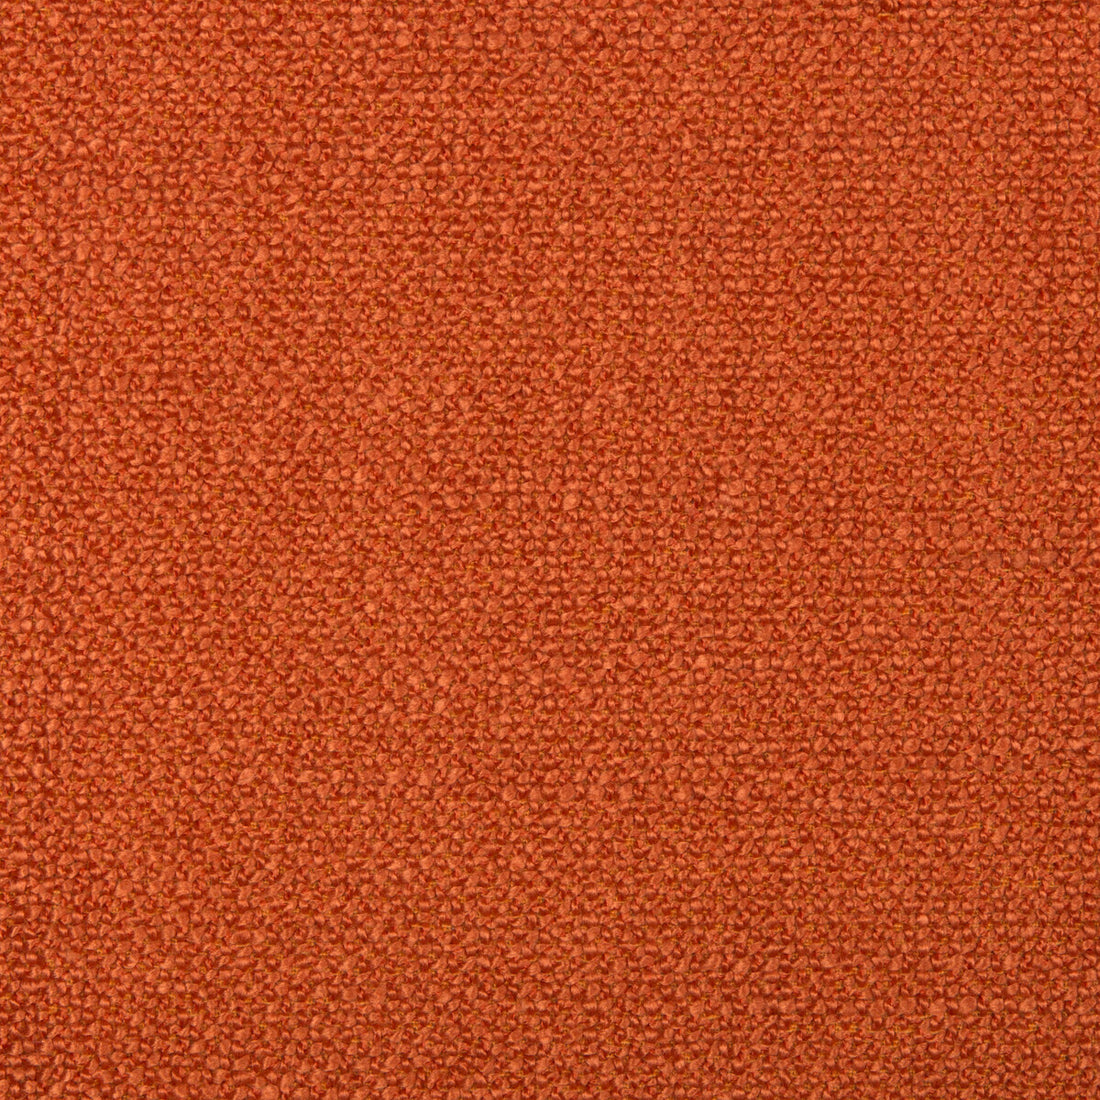 Kravet Smart fabric in 35379-12 color - pattern 35379.12.0 - by Kravet Smart in the Performance Kravetarmor collection